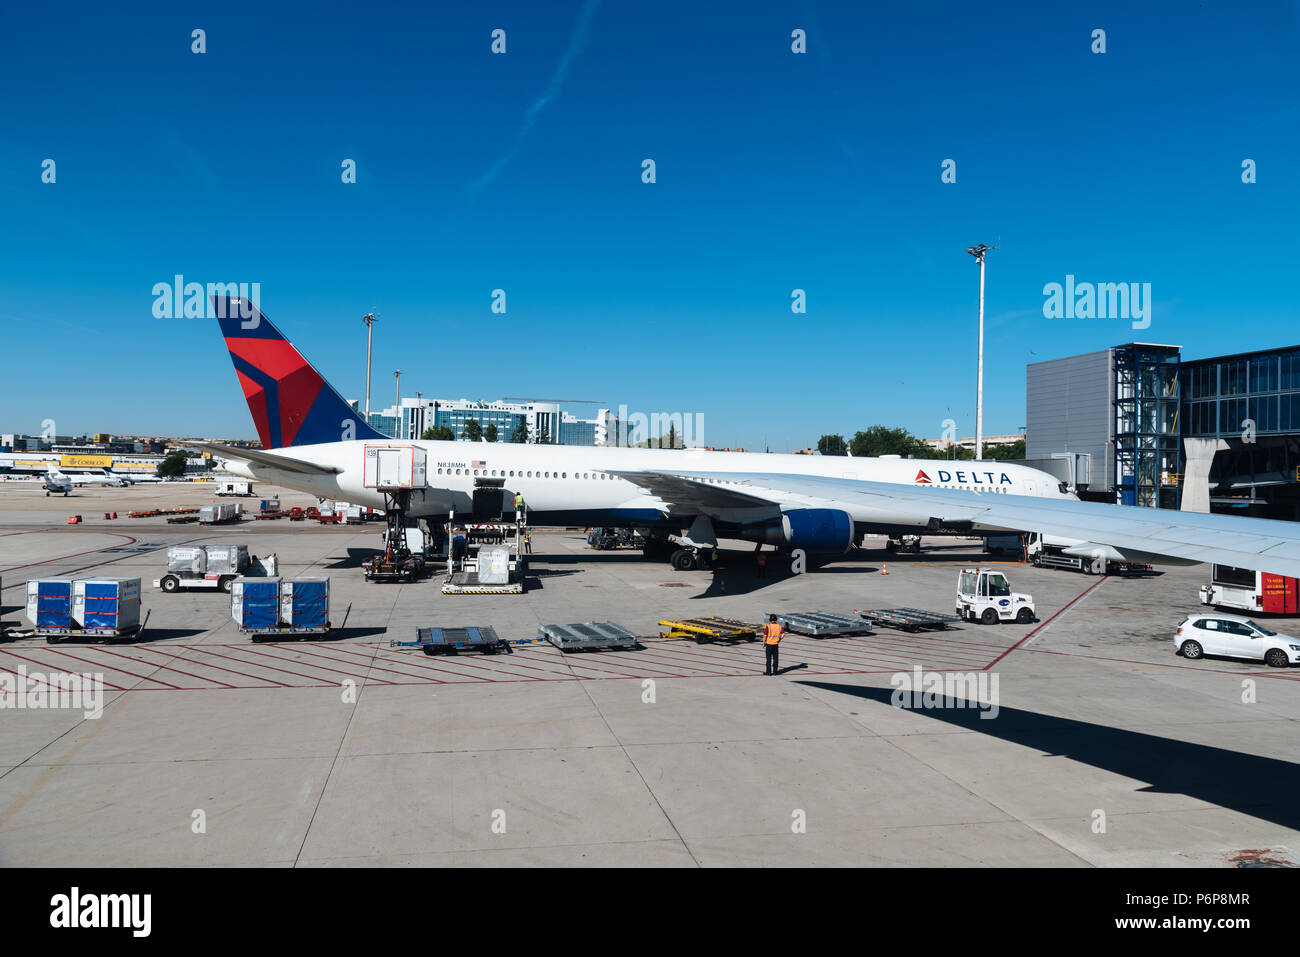 Madrid, Spagna - 20 Giugno 2018: aerei in pista di Barajas - Adolfo SUAREZ Airport Foto Stock